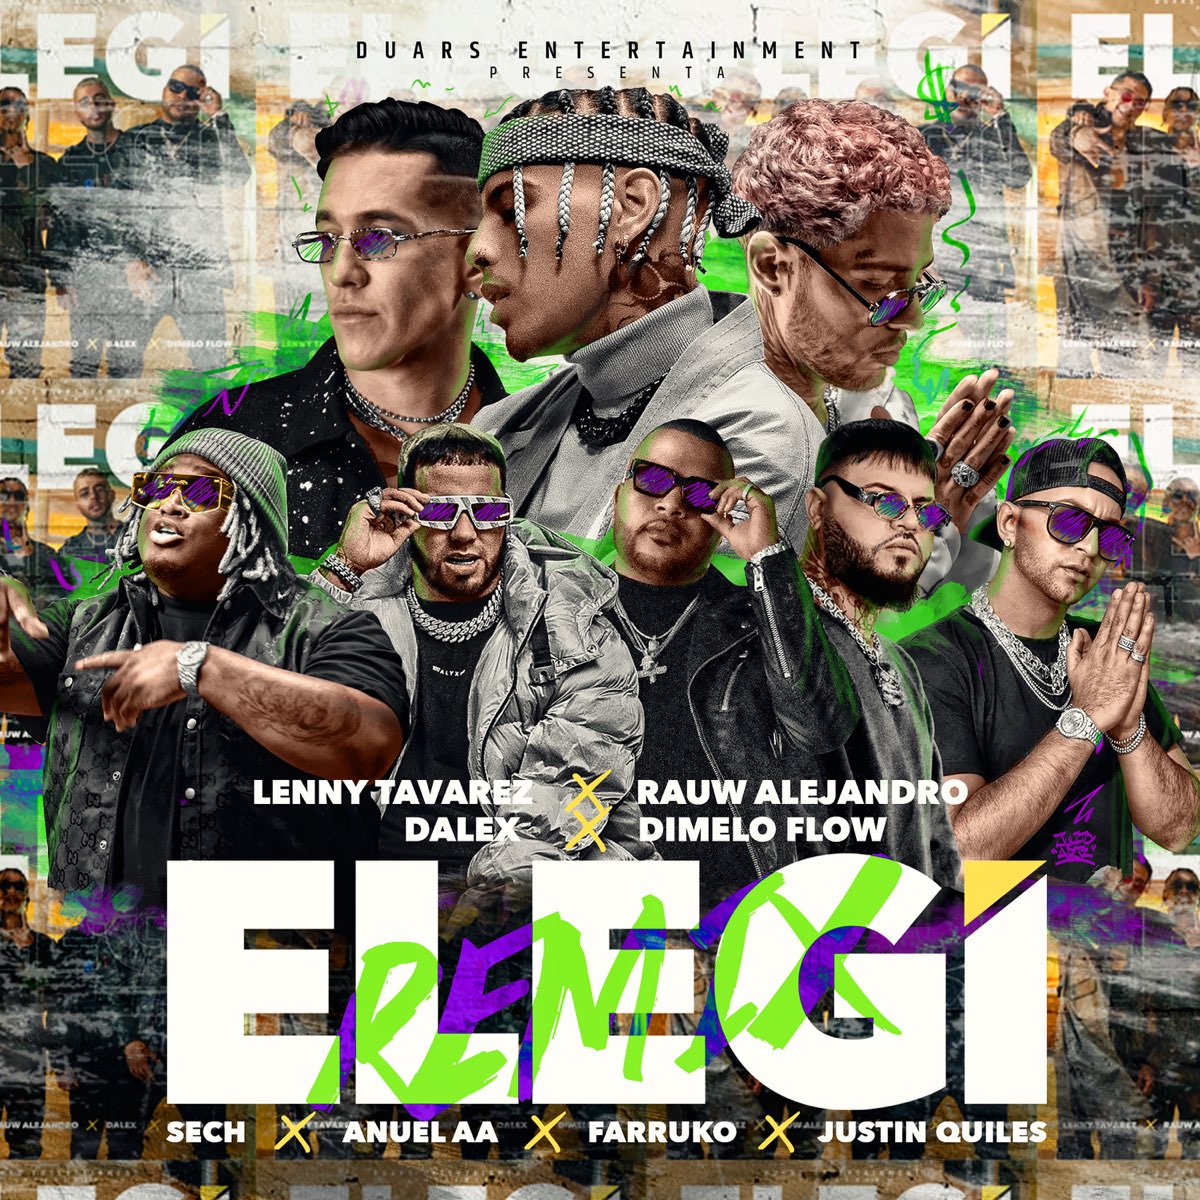 Elegí (feat. Farruko, Anuel AA, Sech, Dímelo Flow & Justin Quiles) [Remix]  - Single by Rauw Alejandro, Dalex & Lenny Tavárez on Apple Music